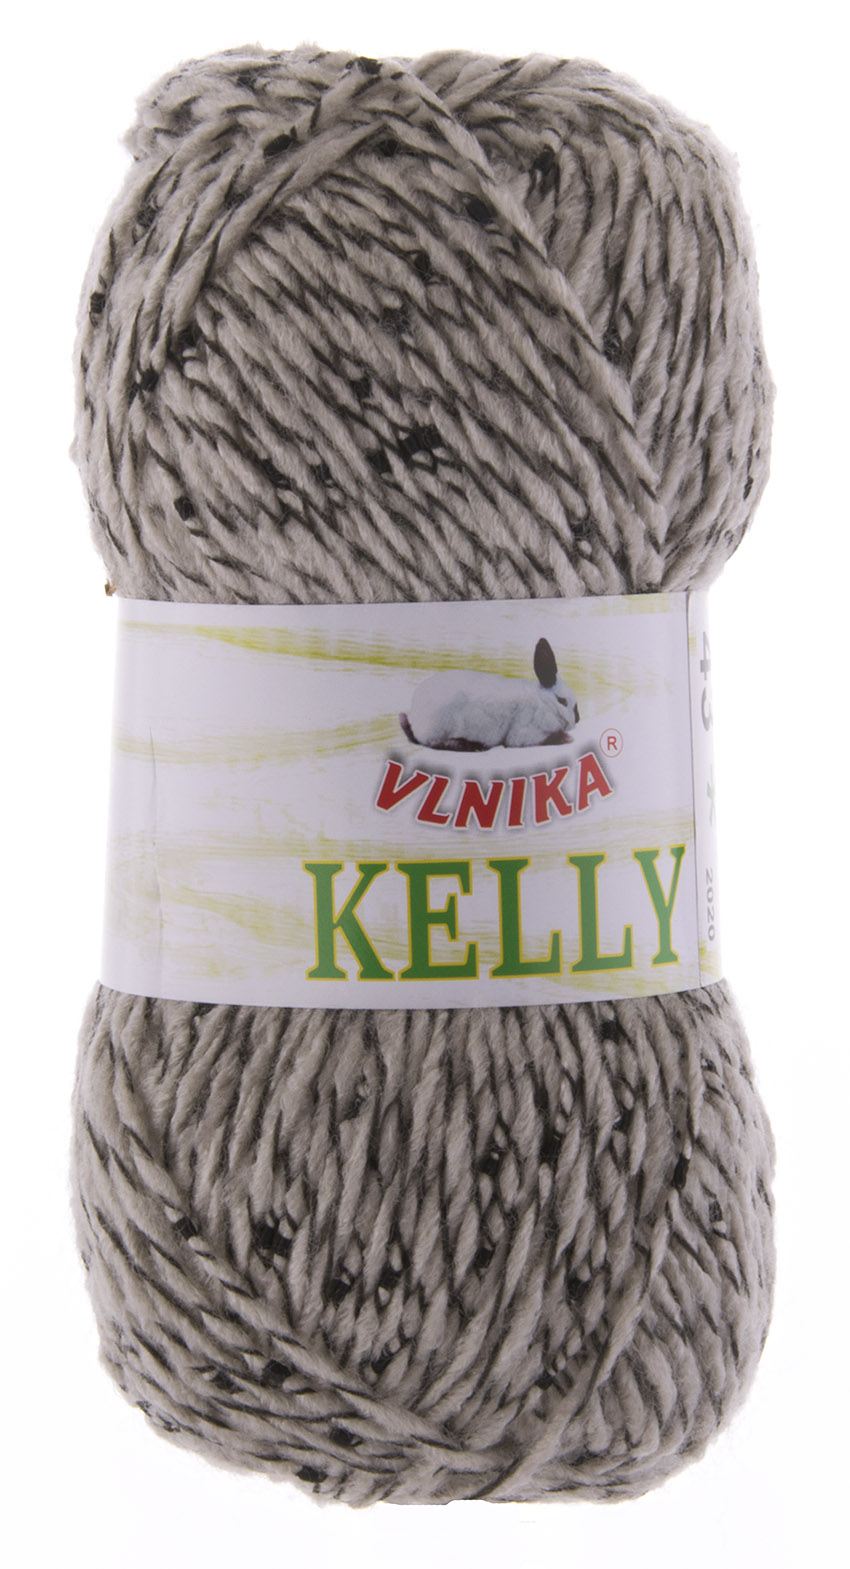 Kelly Yarn  Vlnika - yarn, wool warehouse - buy all of your yarn wool,  needles, and other knitting supplies online